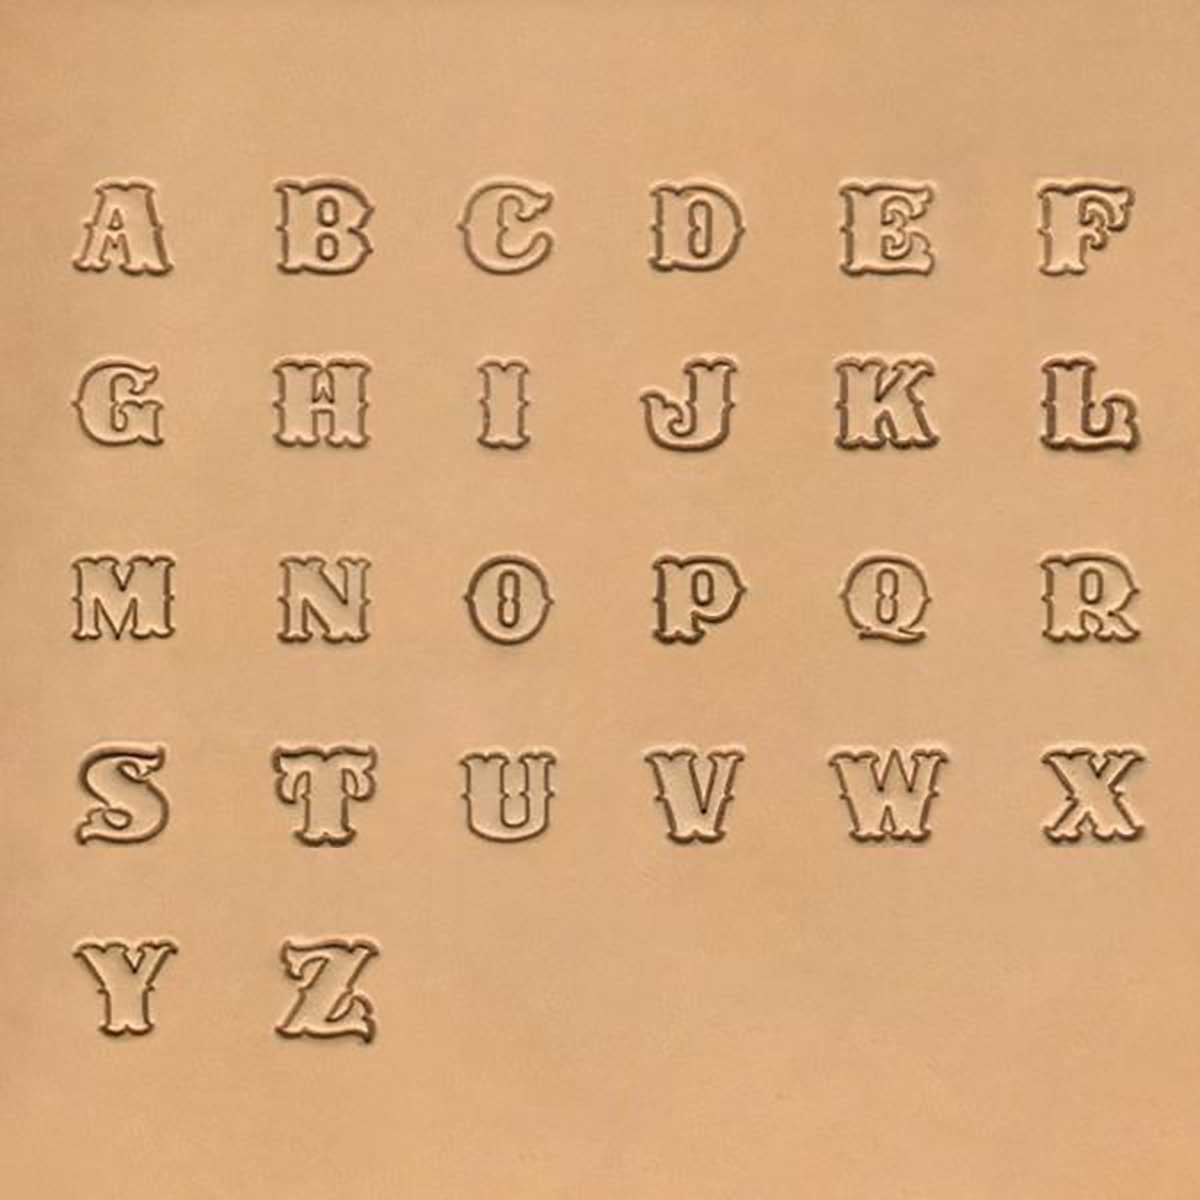 Lot de 26 maxi tampons, les 26 lettres de l'alphabet en majuscule